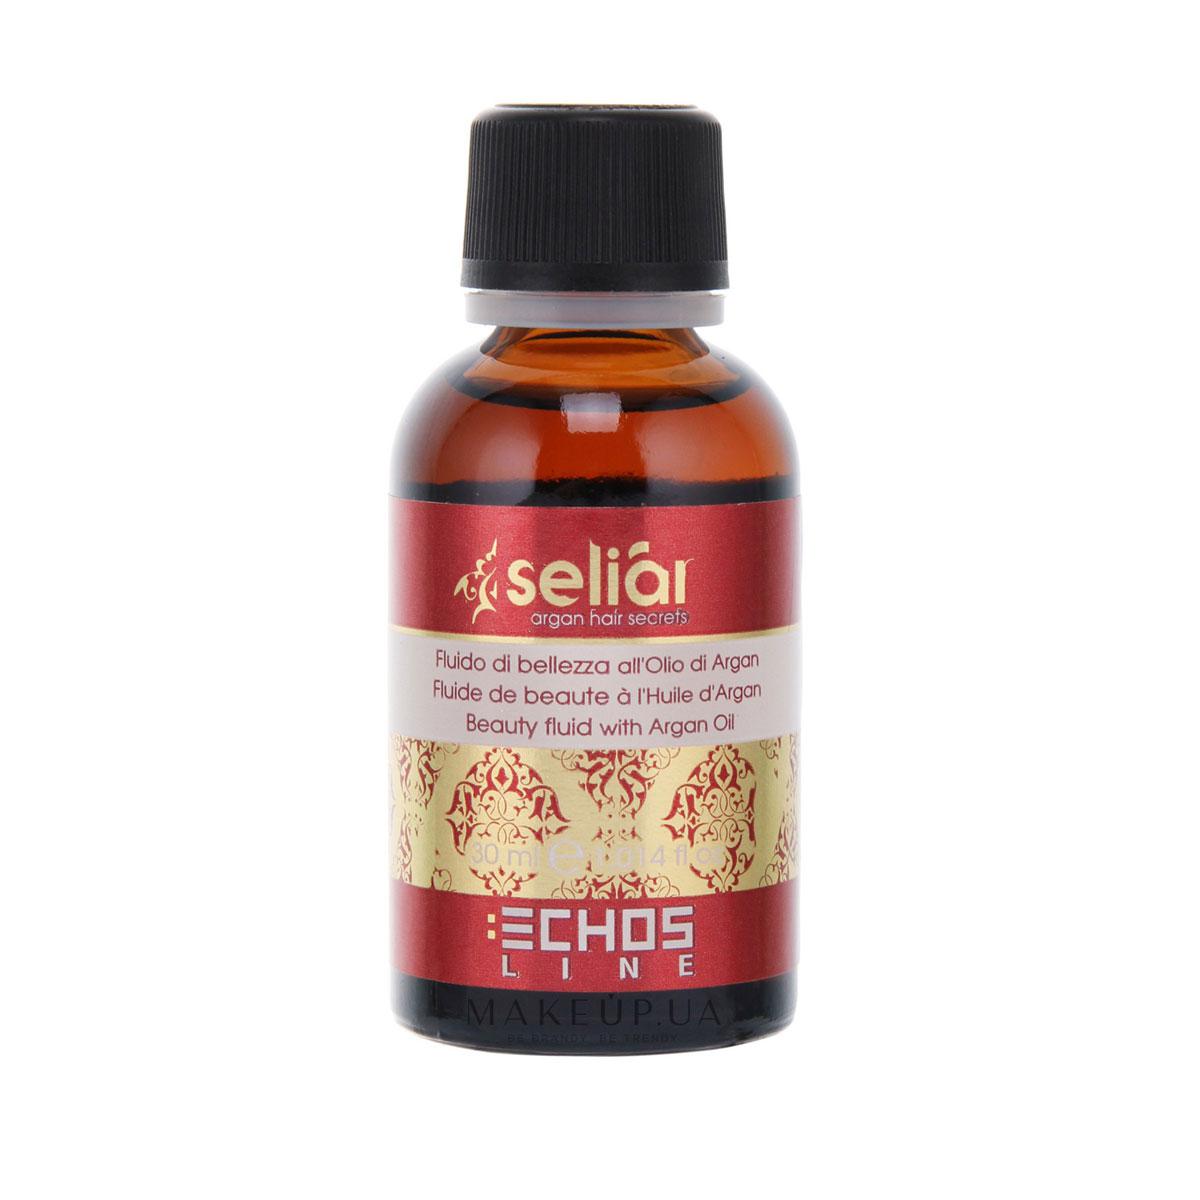 روغن آرگان مو - echos selial oil